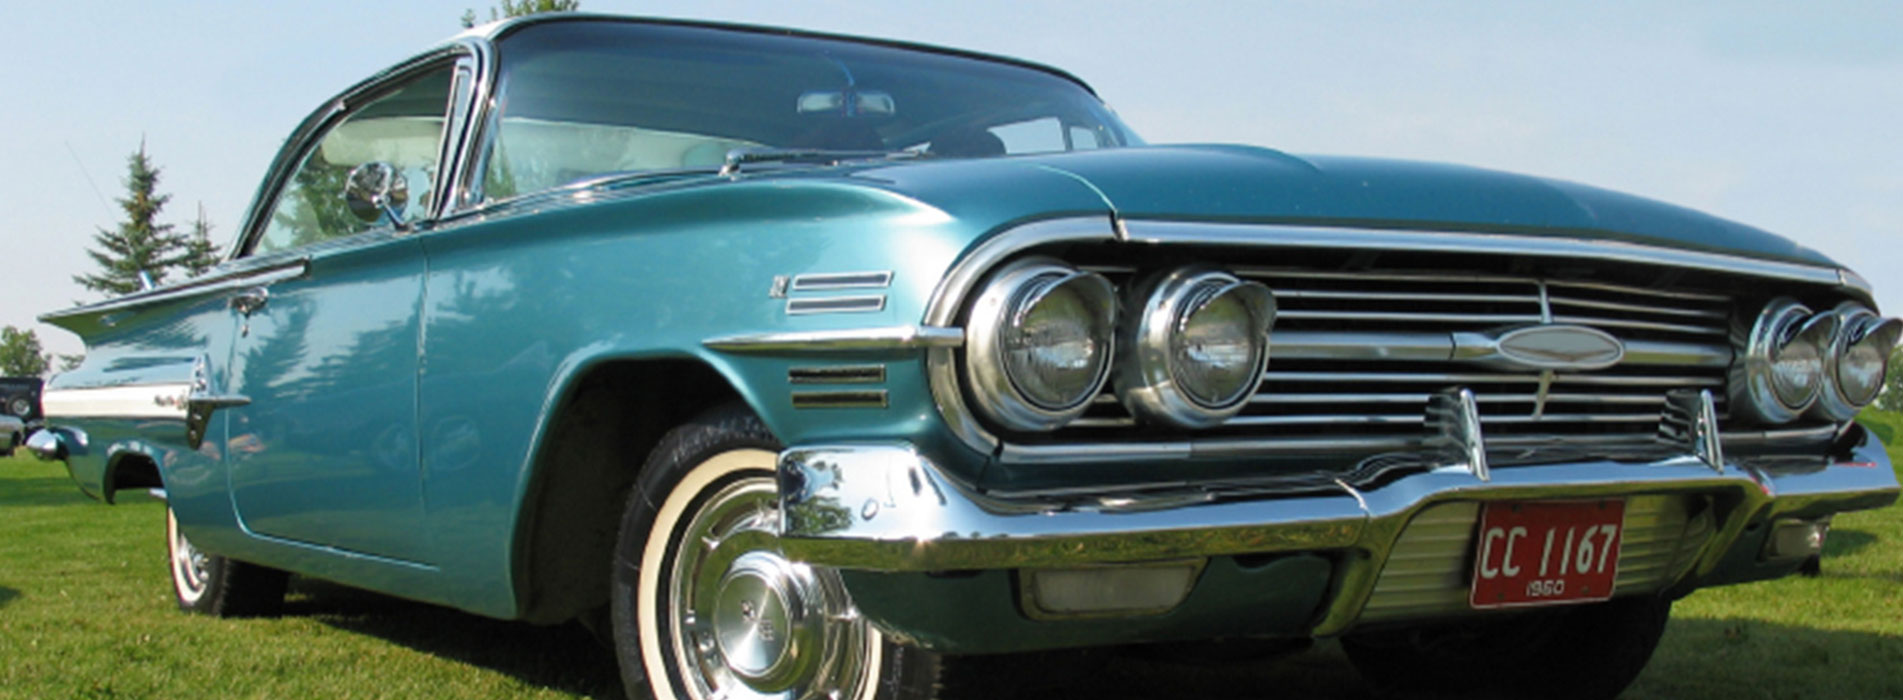 North Carolina Classic Car Insurance Coverage